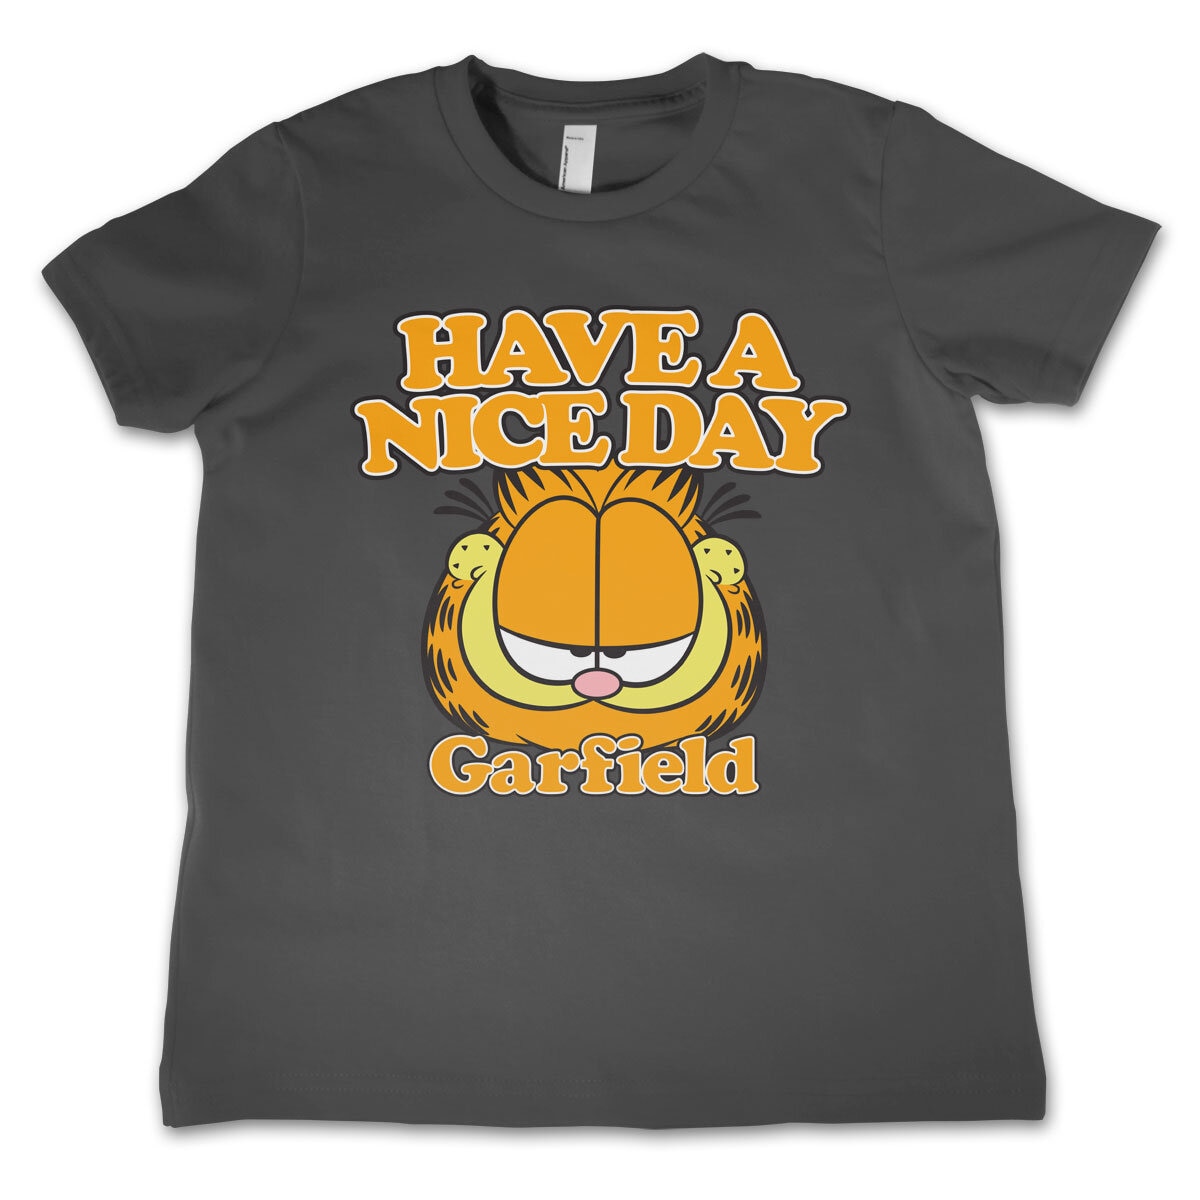 Garfield - Have A Nice Day Kids T-Shirt